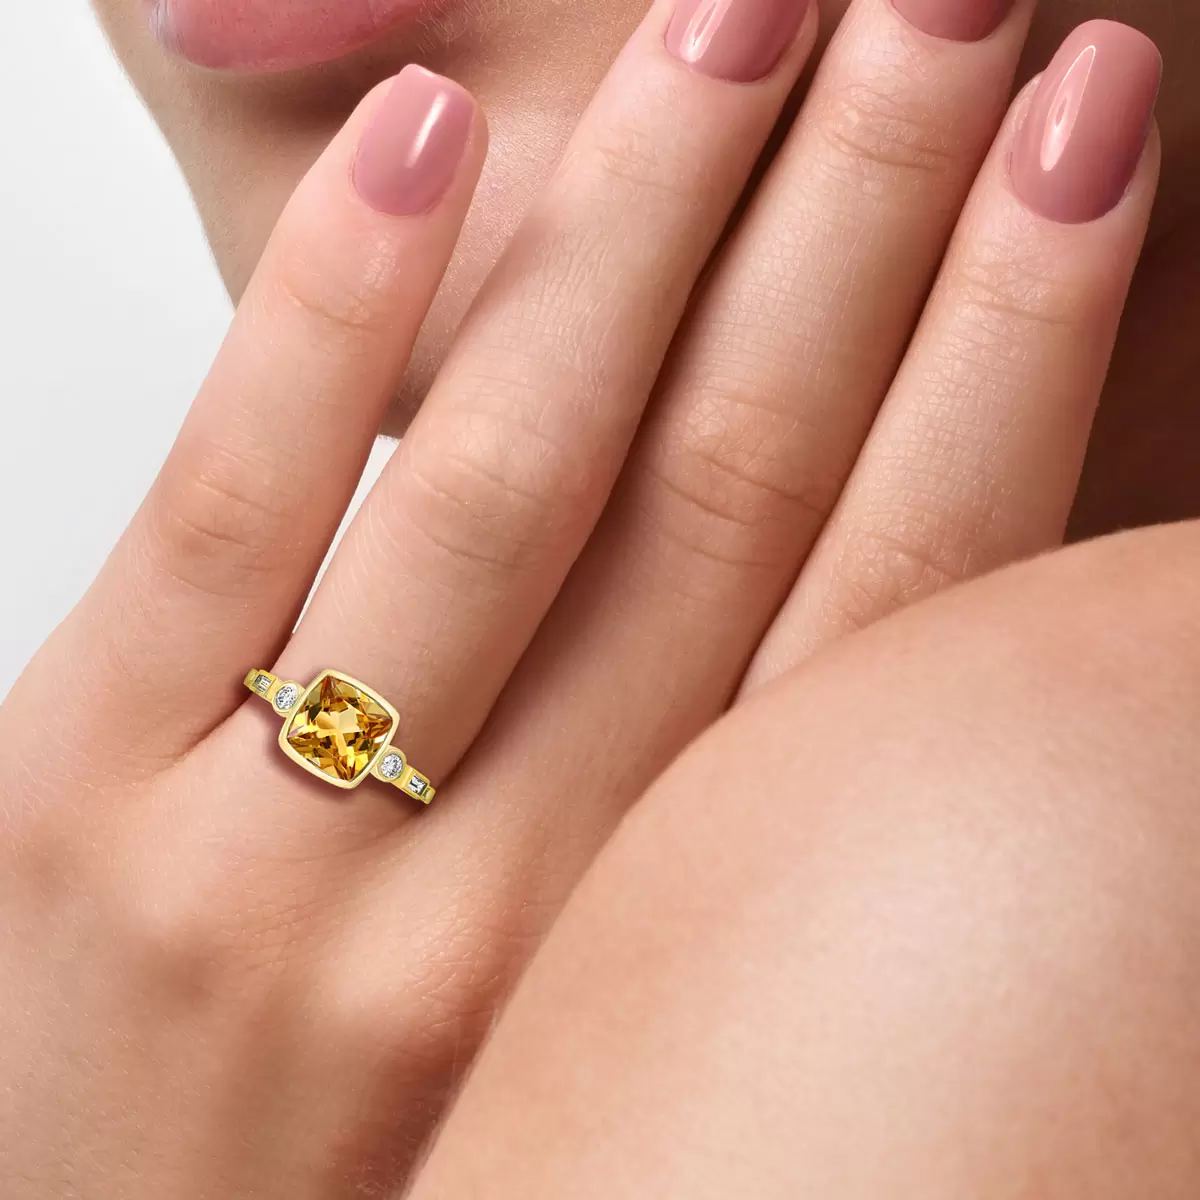 Citrine and Diamond Ring , 14ct Yellow Gold